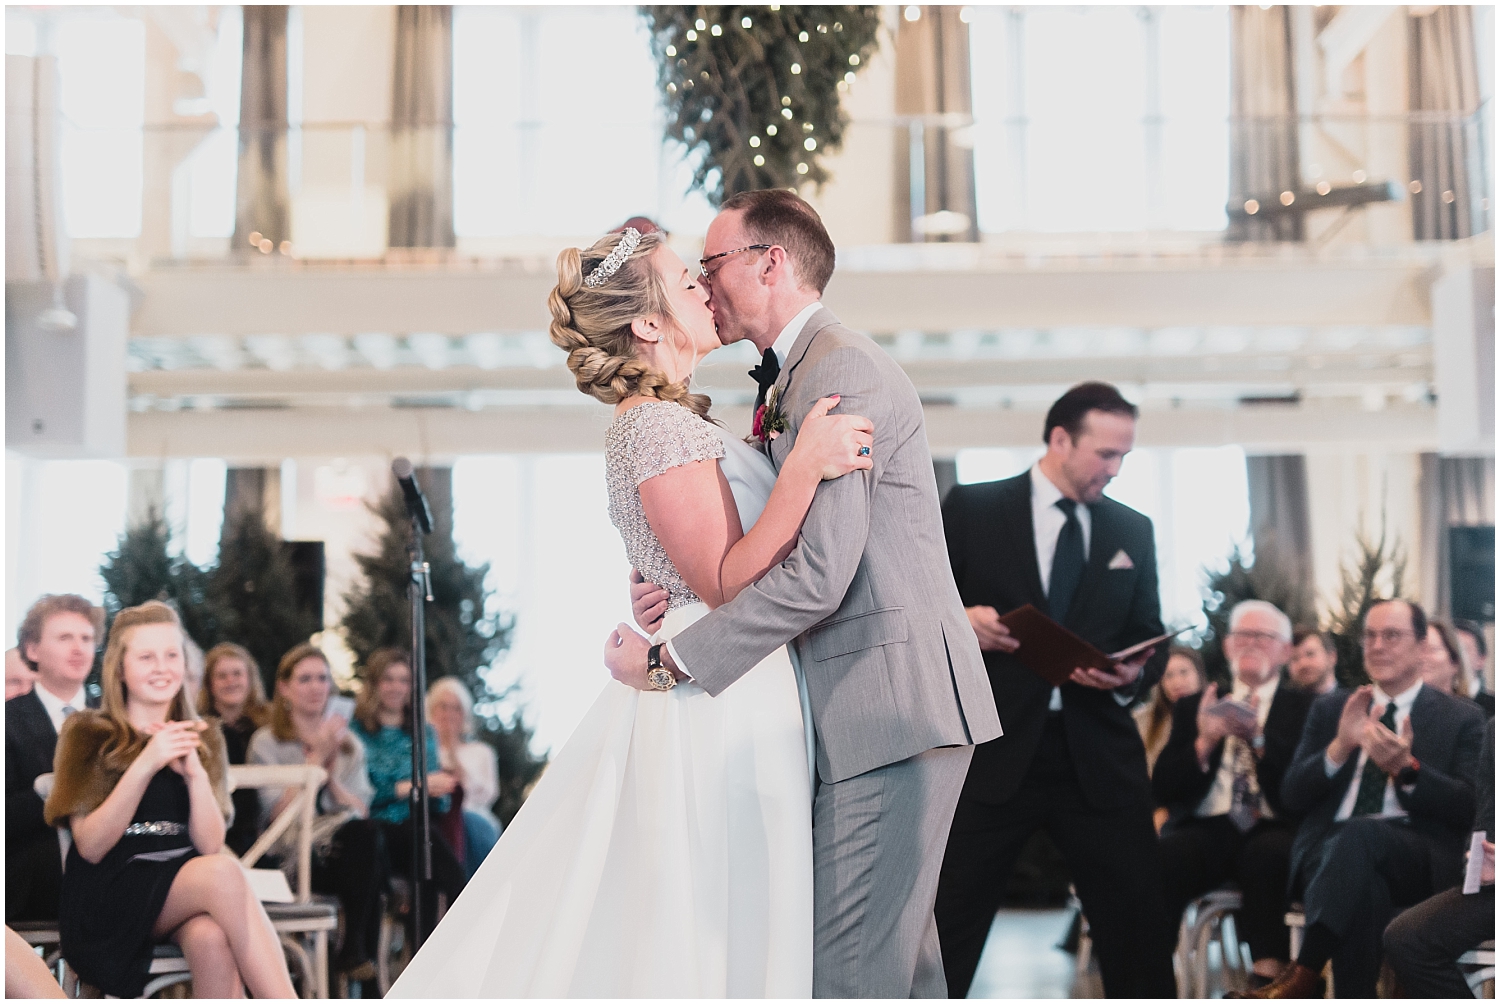  Minnesota Wedding Planner, Mpls Wedding Planner, Machine Shop MPLS, Mpls Wedding Venue,   Bride and groom kiss at their wedding ceremony 